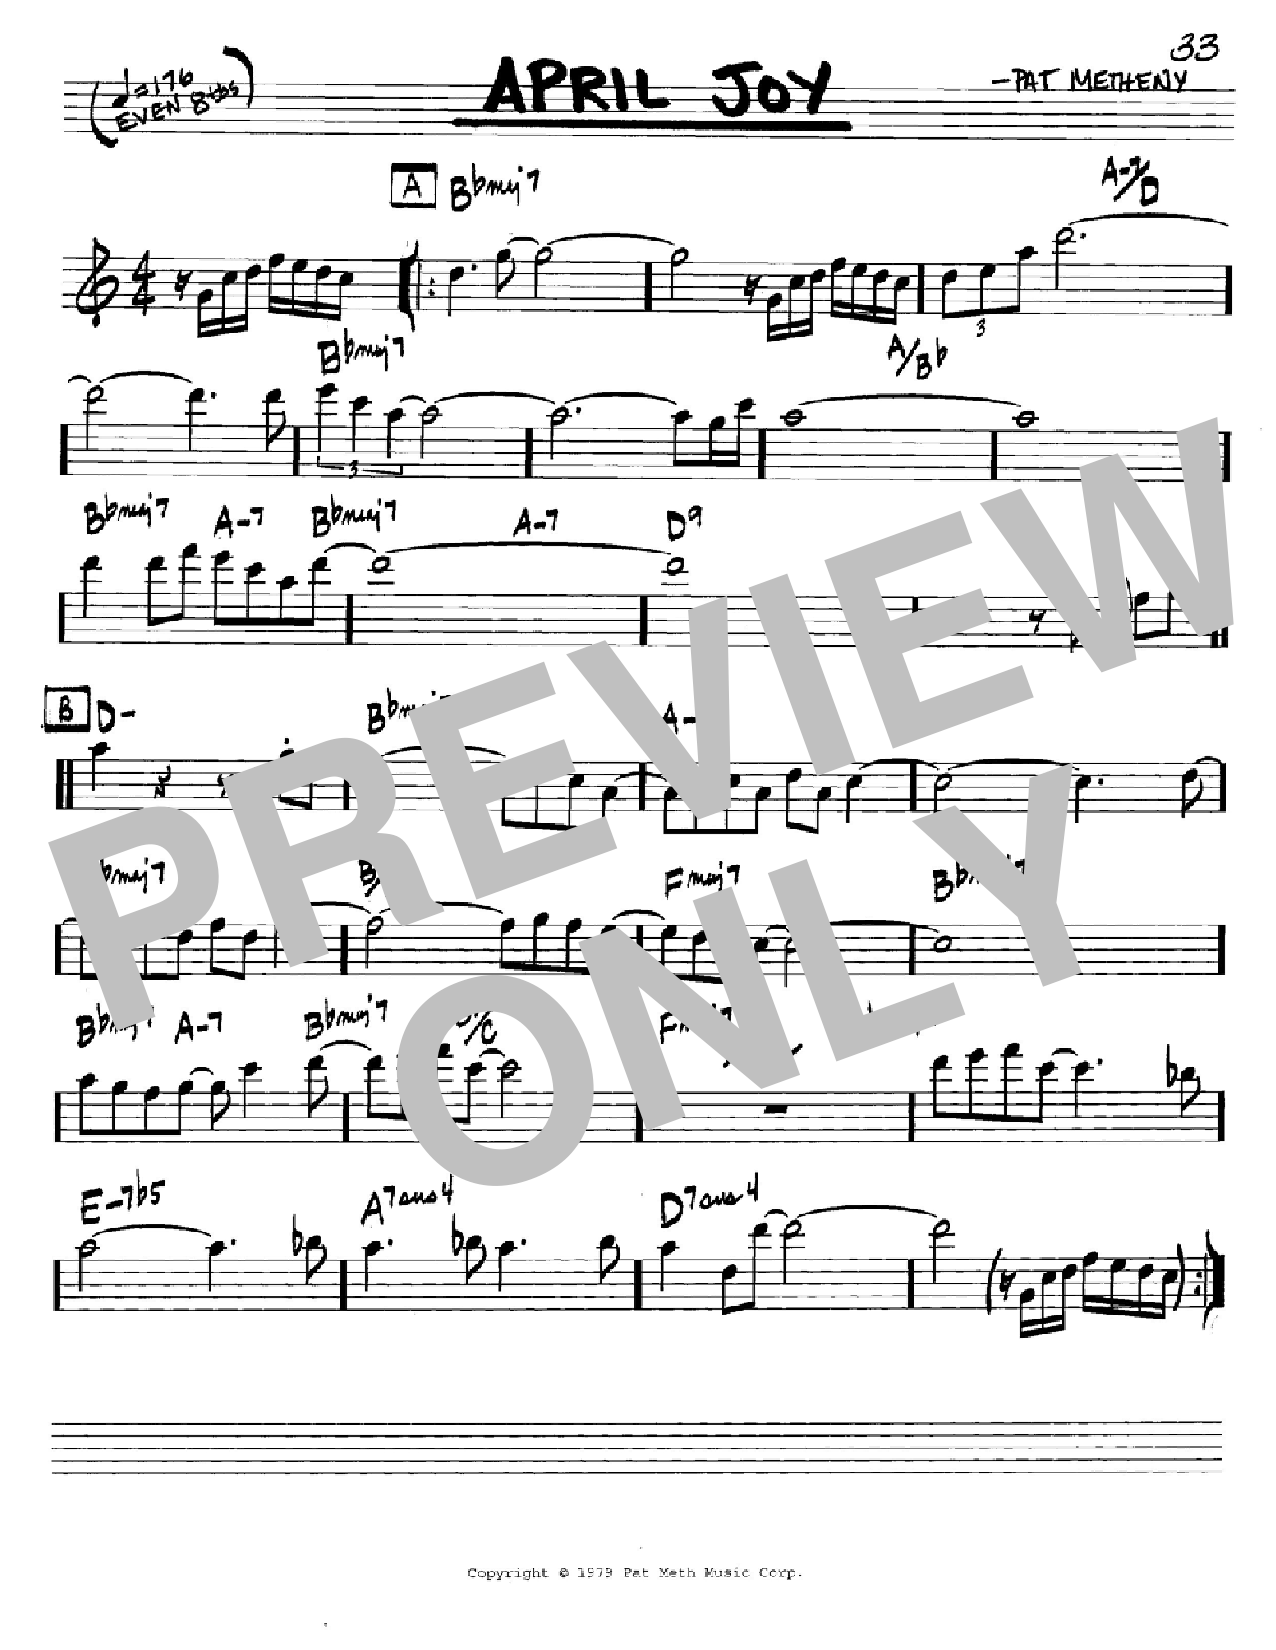 Pat Metheny April Joy Sheet Music Notes & Chords for Real Book - Melody & Chords - Eb Instruments - Download or Print PDF